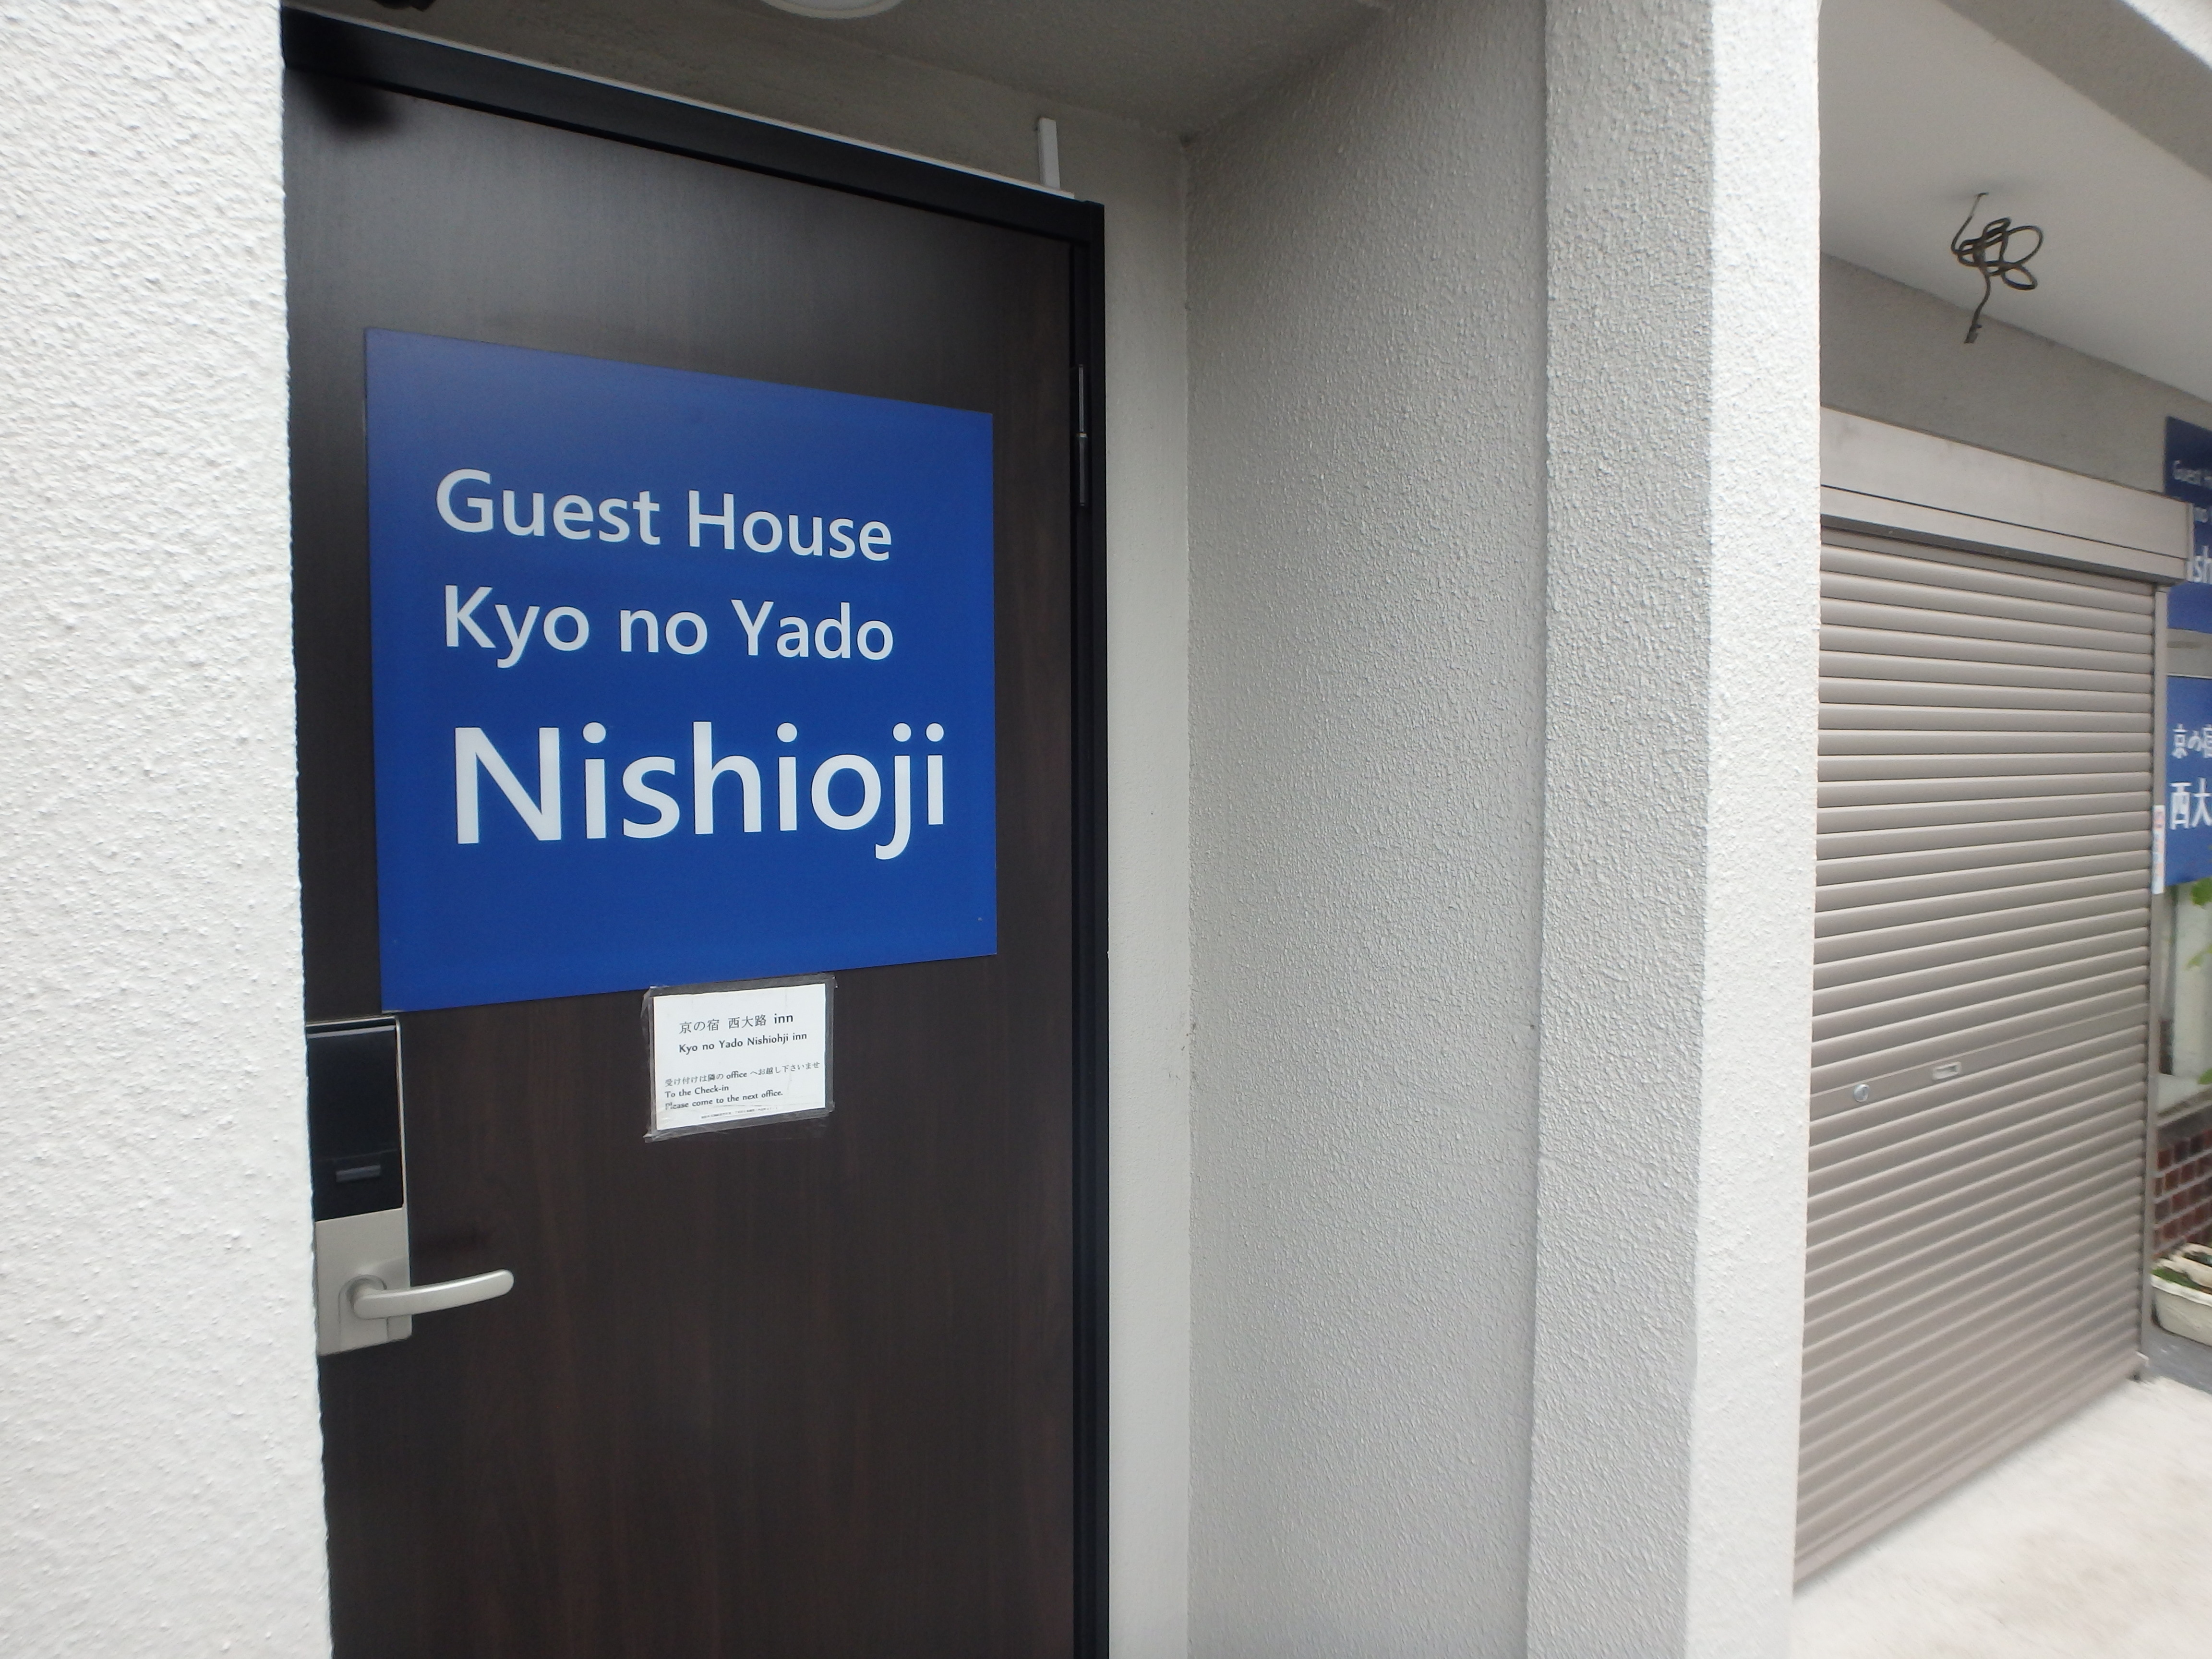 It is the entrance of Kyo no Yado Nishioji inn.